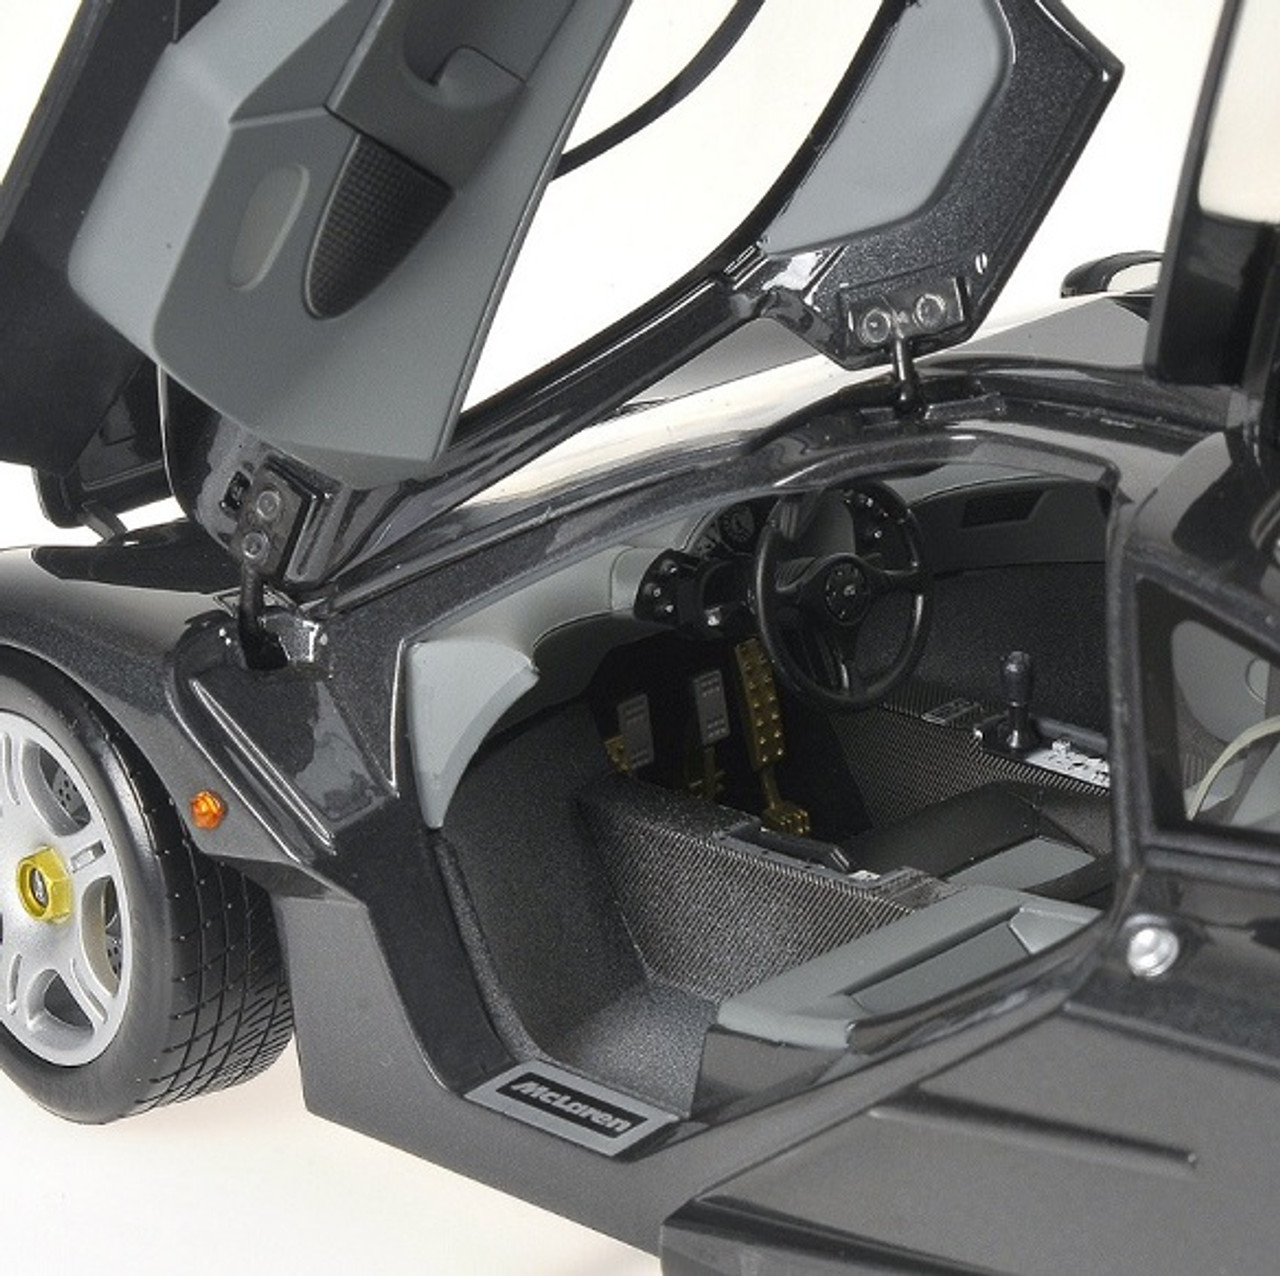 1/18 Minichamps McLaren F1 Road Car (Black) Diecast Car Model Limited ...